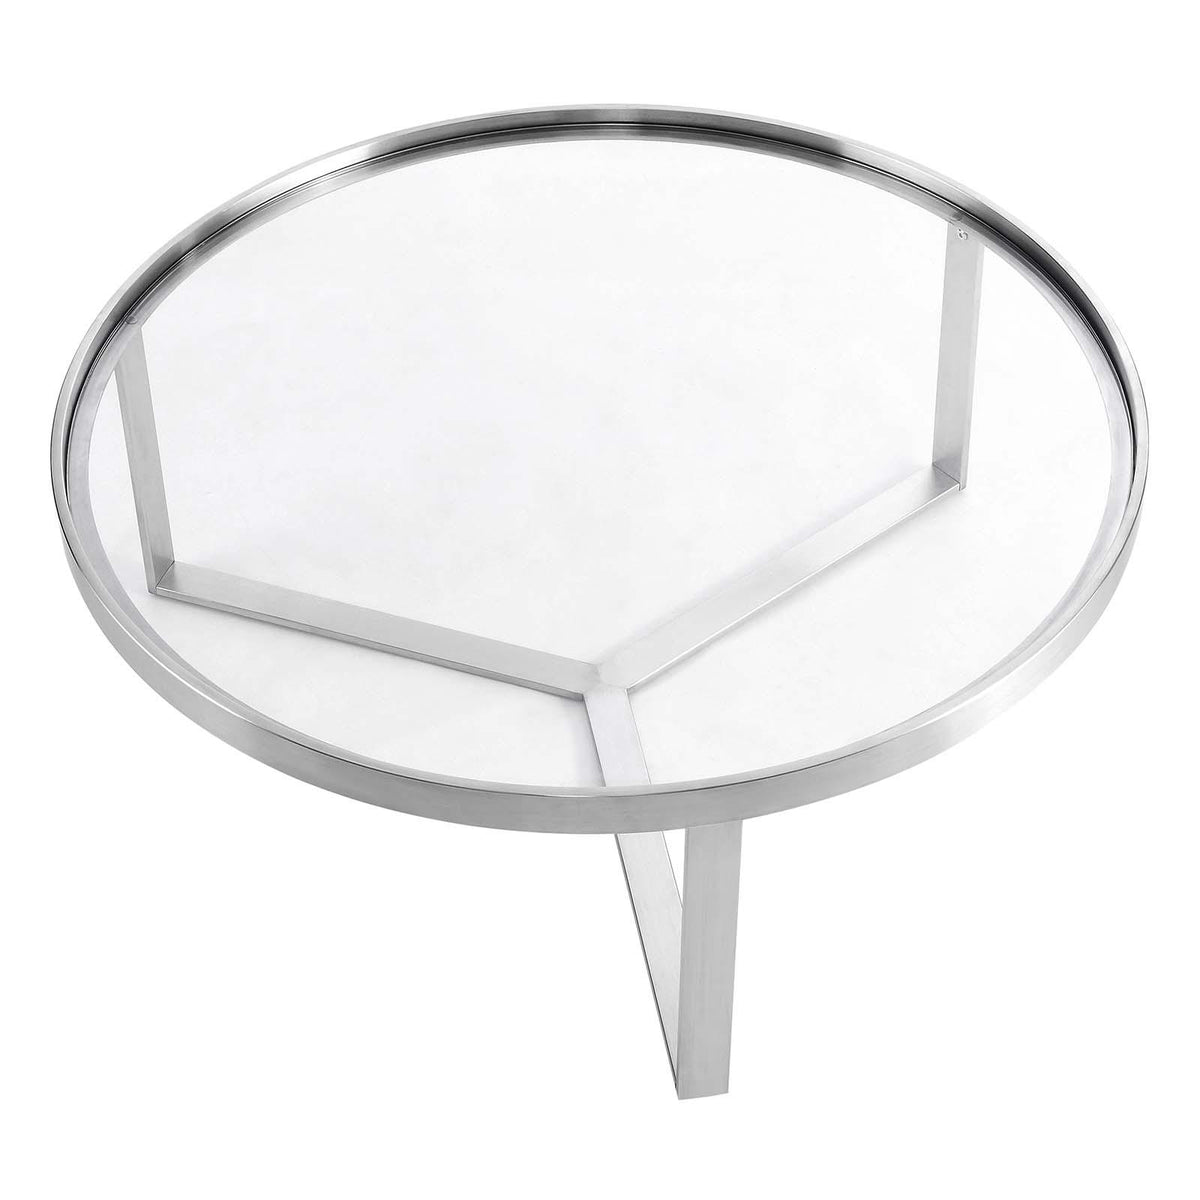 Modway Furniture Modern Relay Coffee Table - EEI-6154